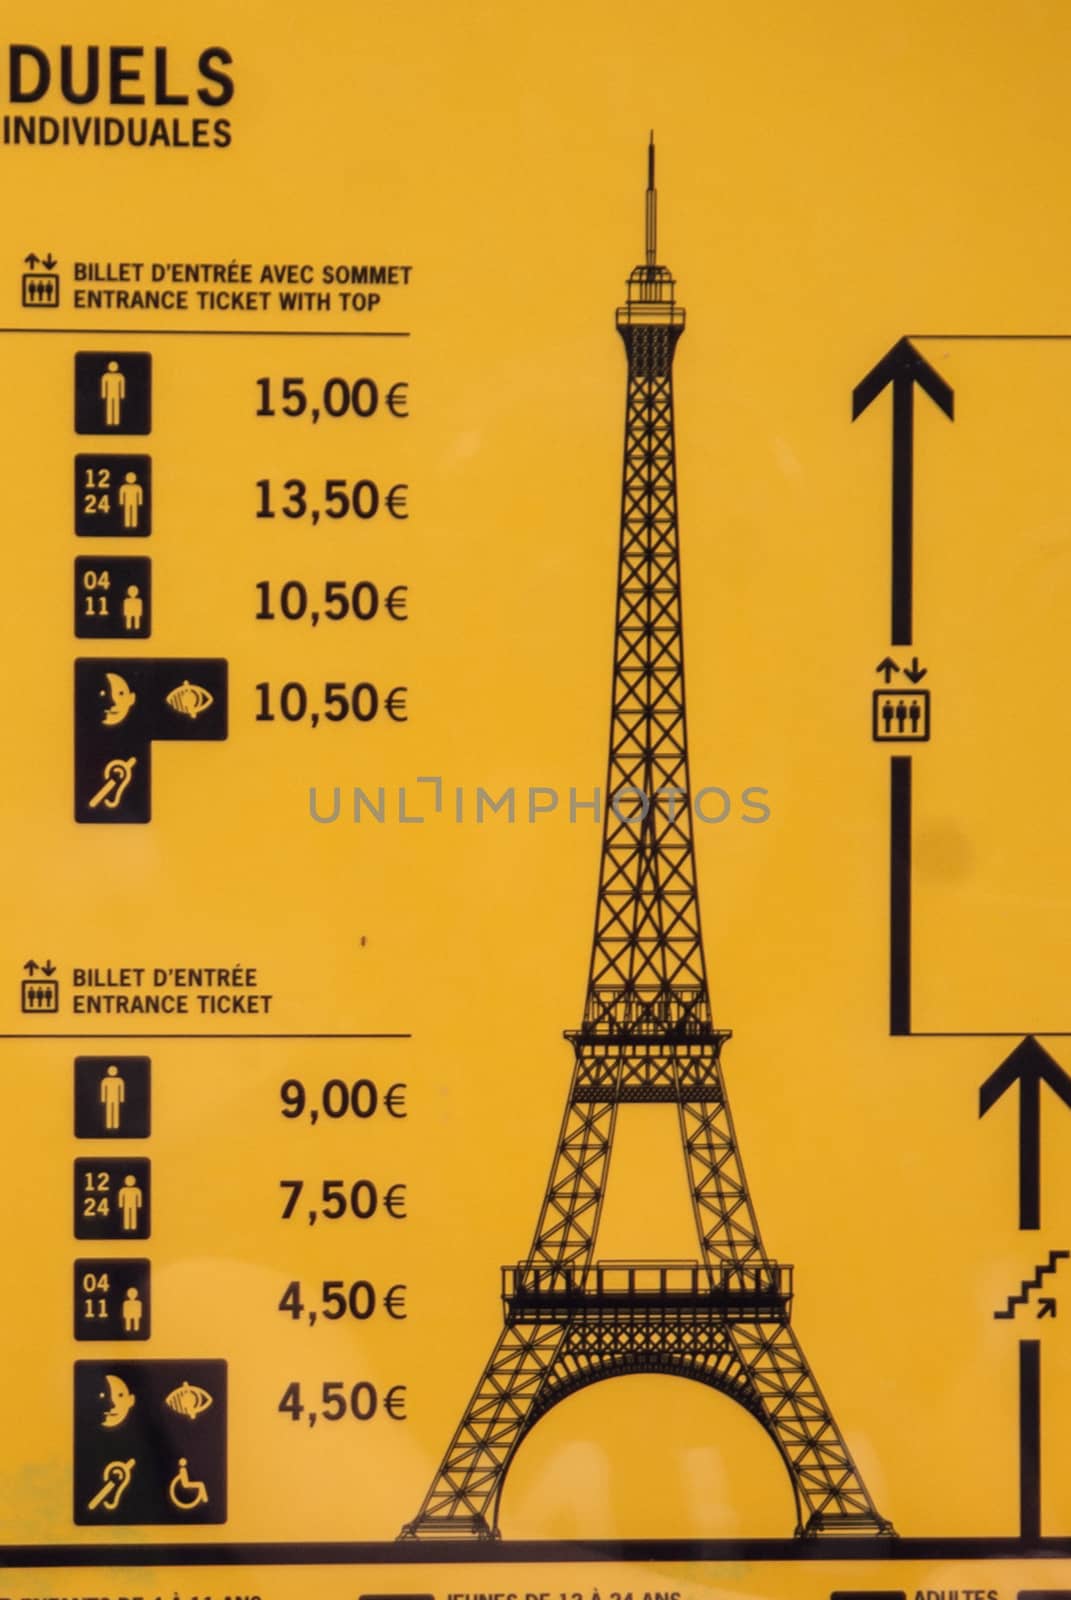 Price chart board Eiffel Tower Tour Eiffel blue sky clouds by MXW_Stock